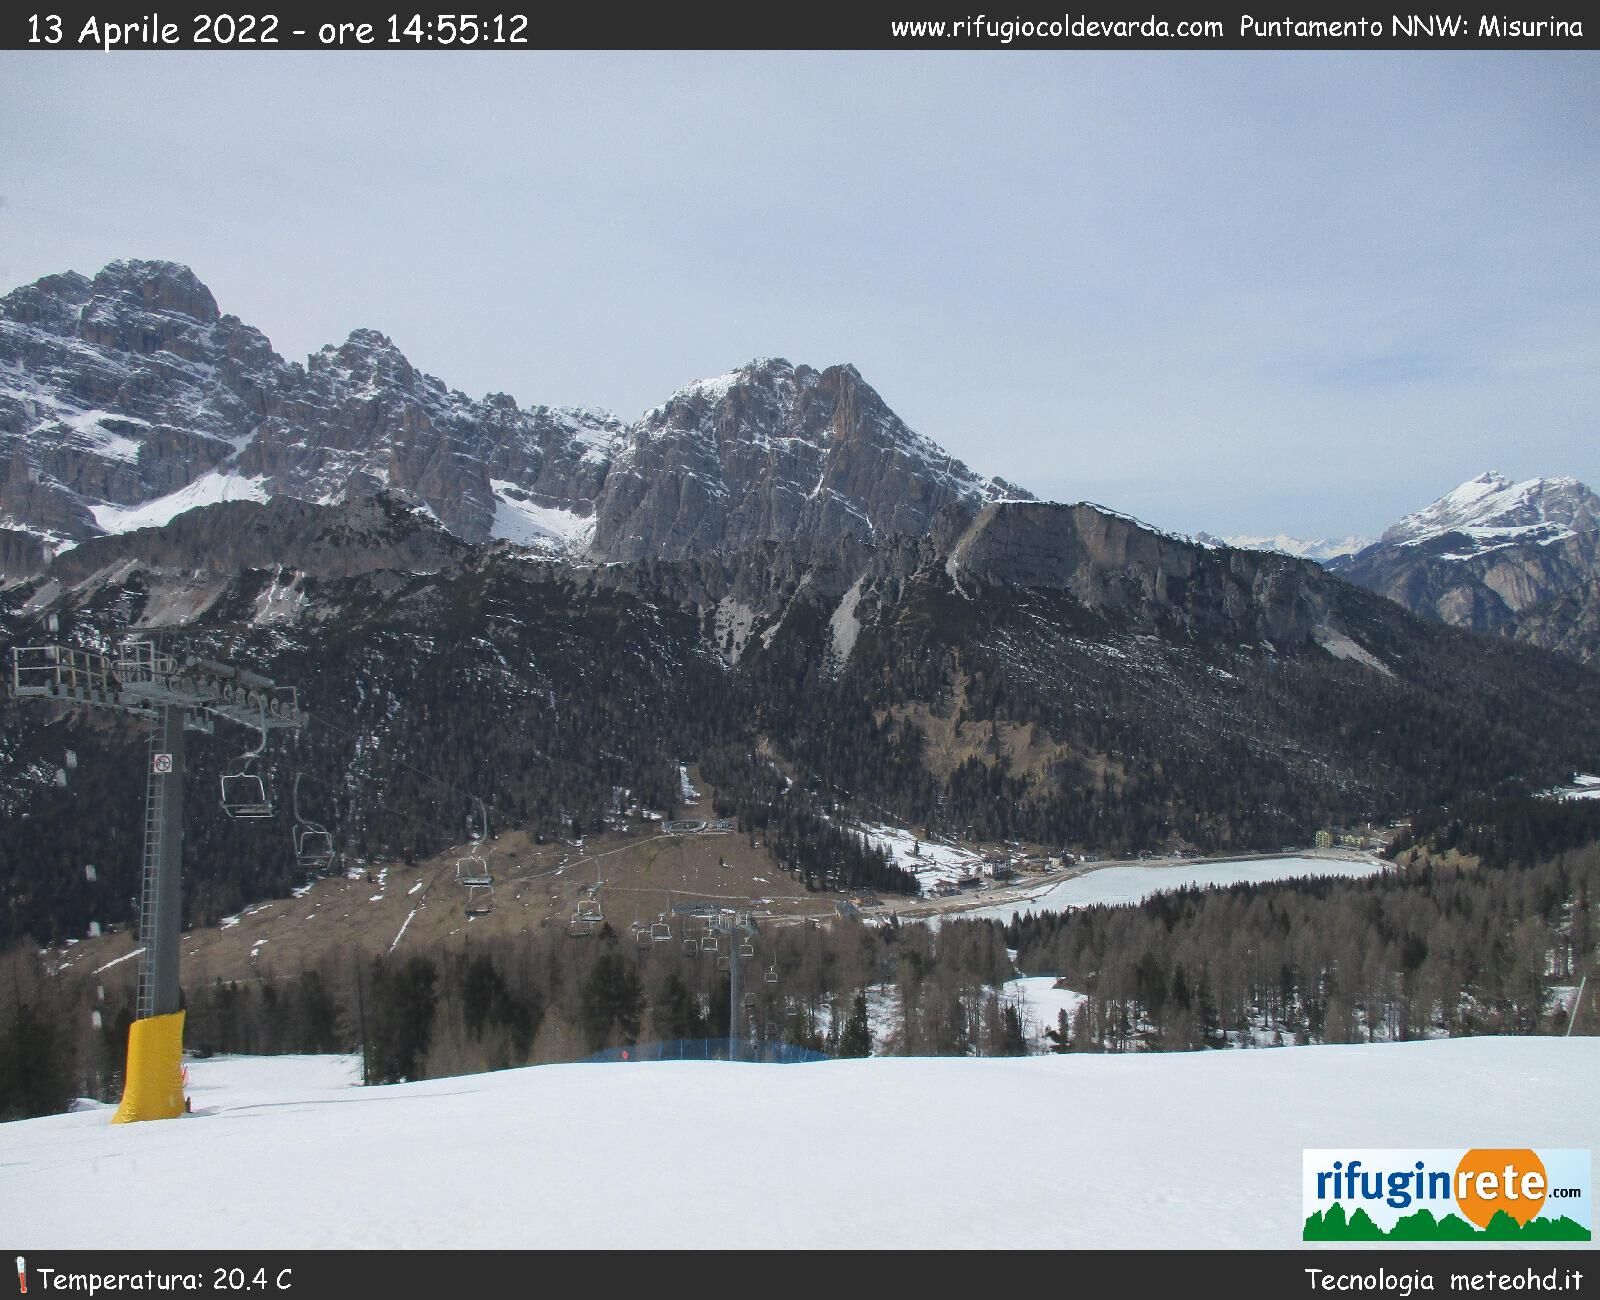 webcam  Rifugio Col De Varda (2106 m), Auronzo di Cadore (BL), webcam provincia di Belluno, webcam Trentino-Alto Adige, Webcam Alpi - Trentino-Alto Adige